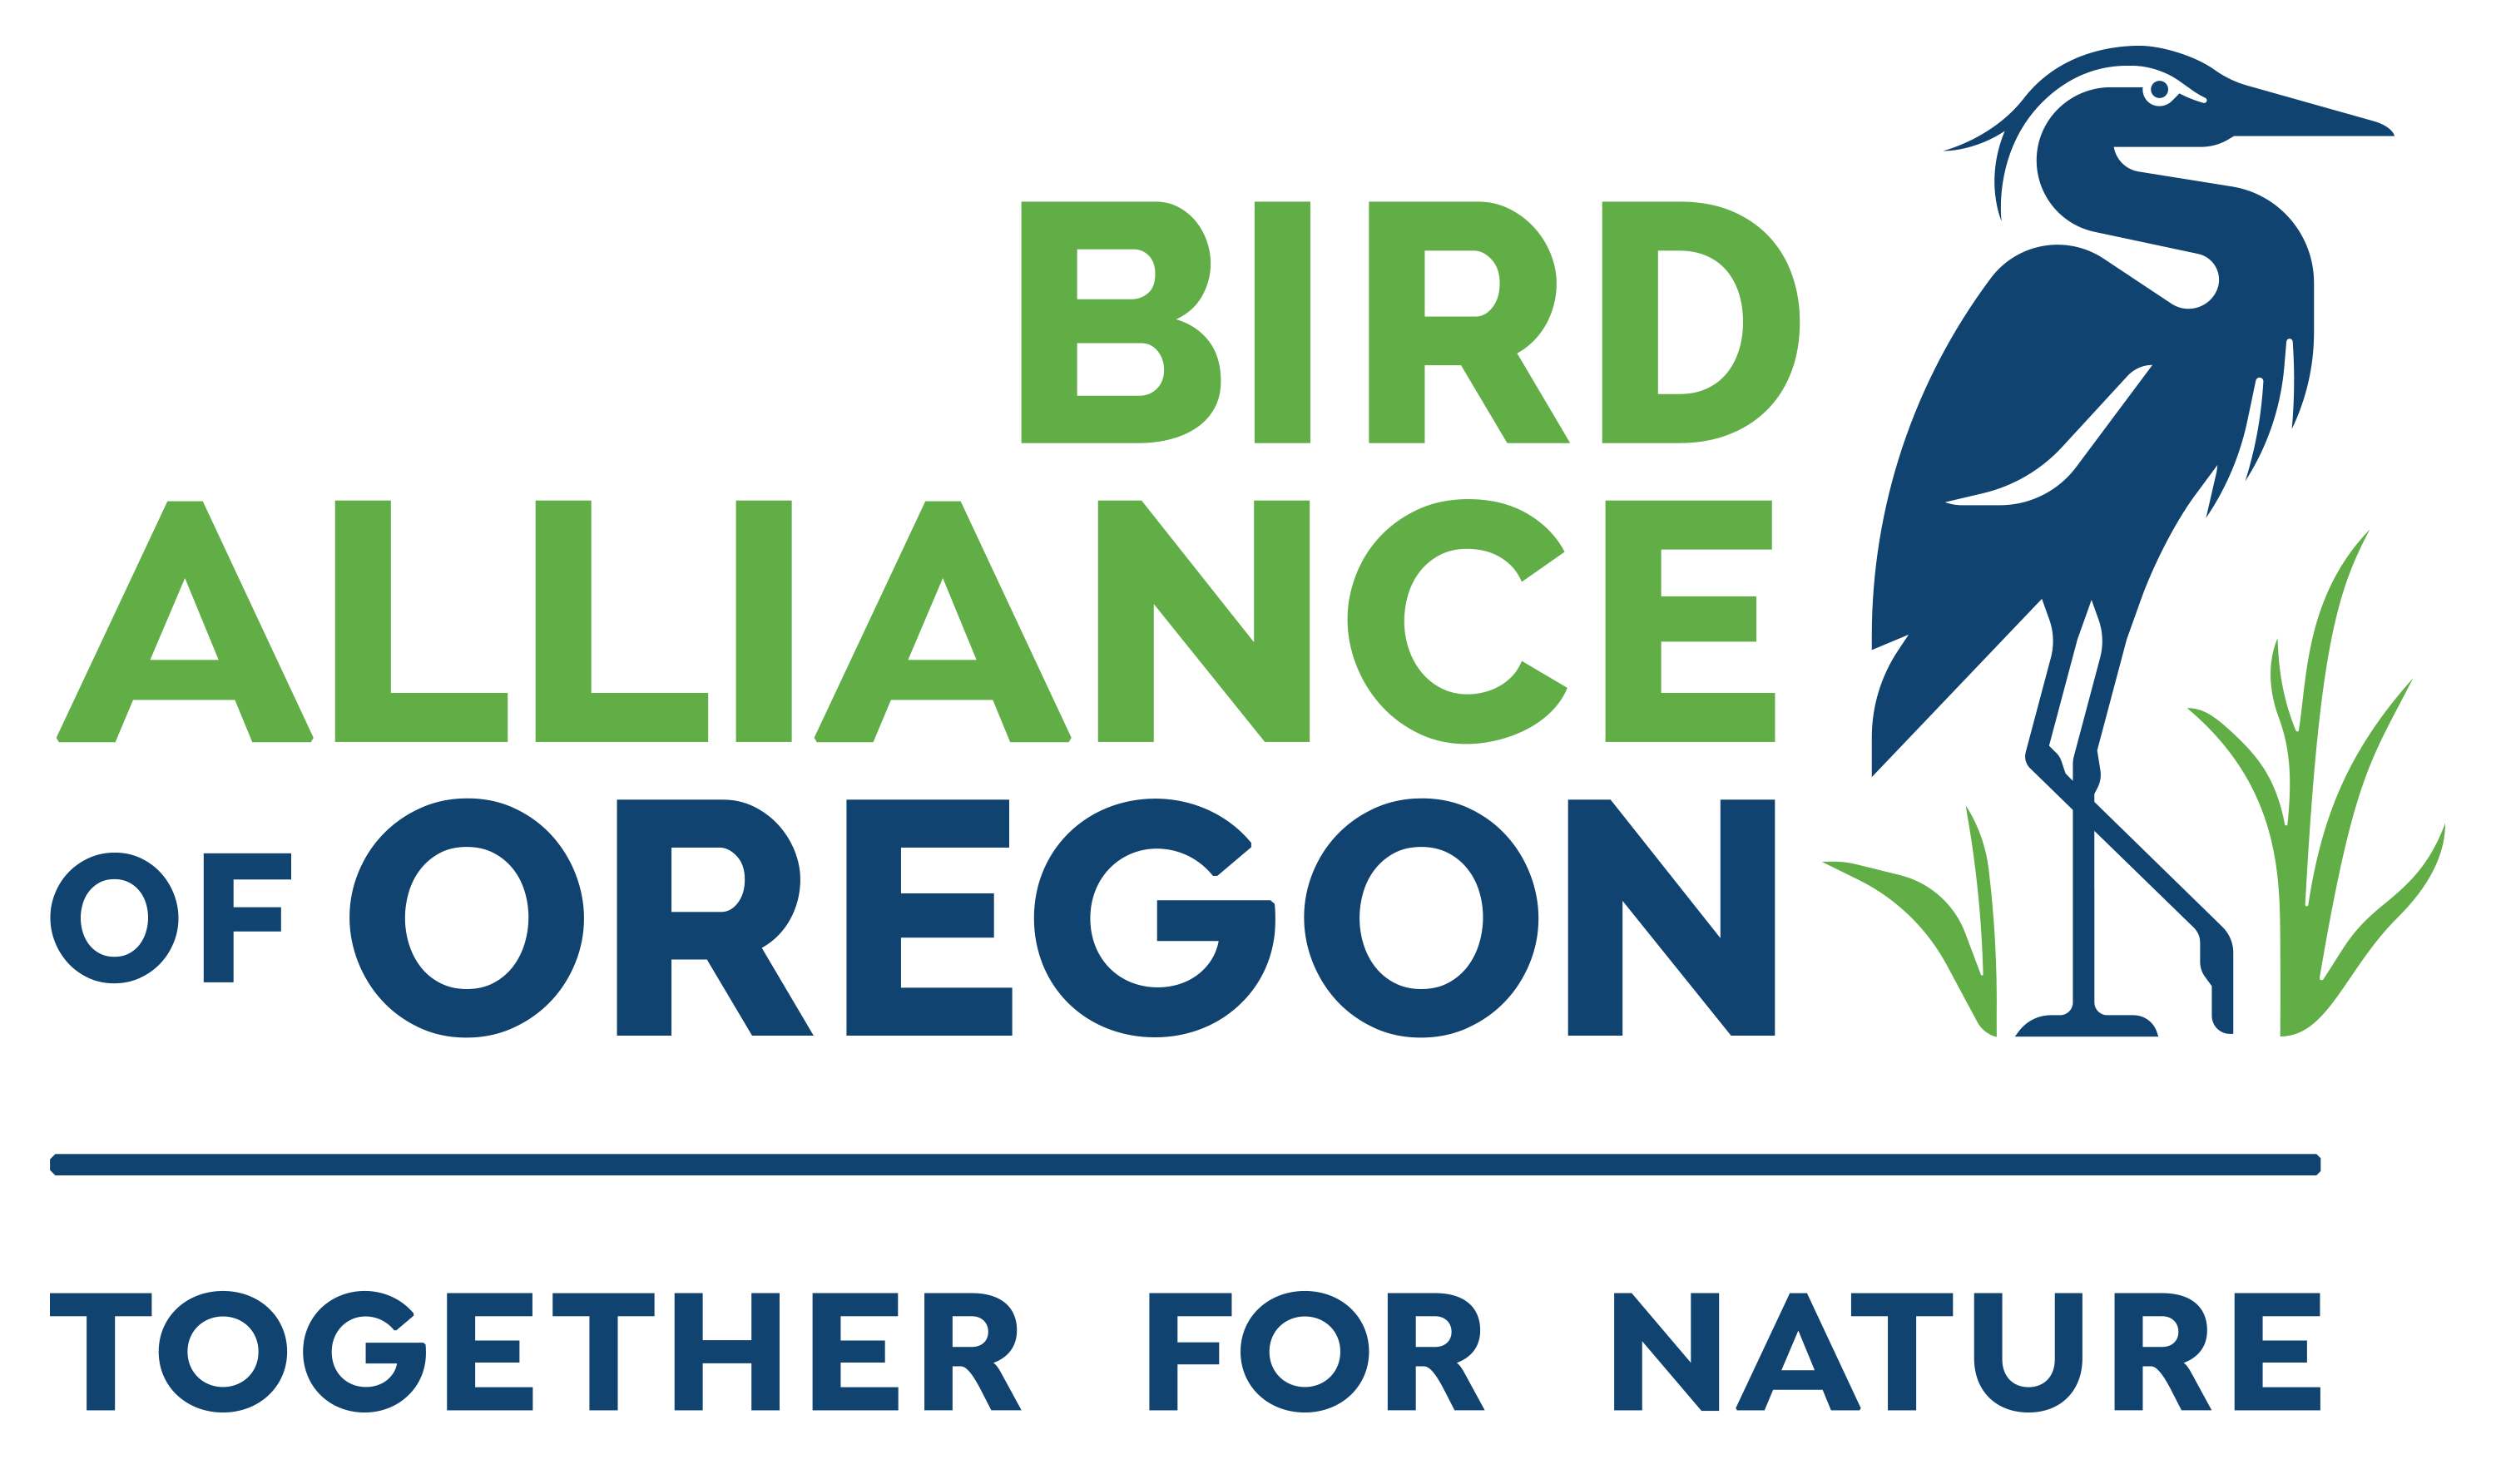 Bird alliance of oregon logo.